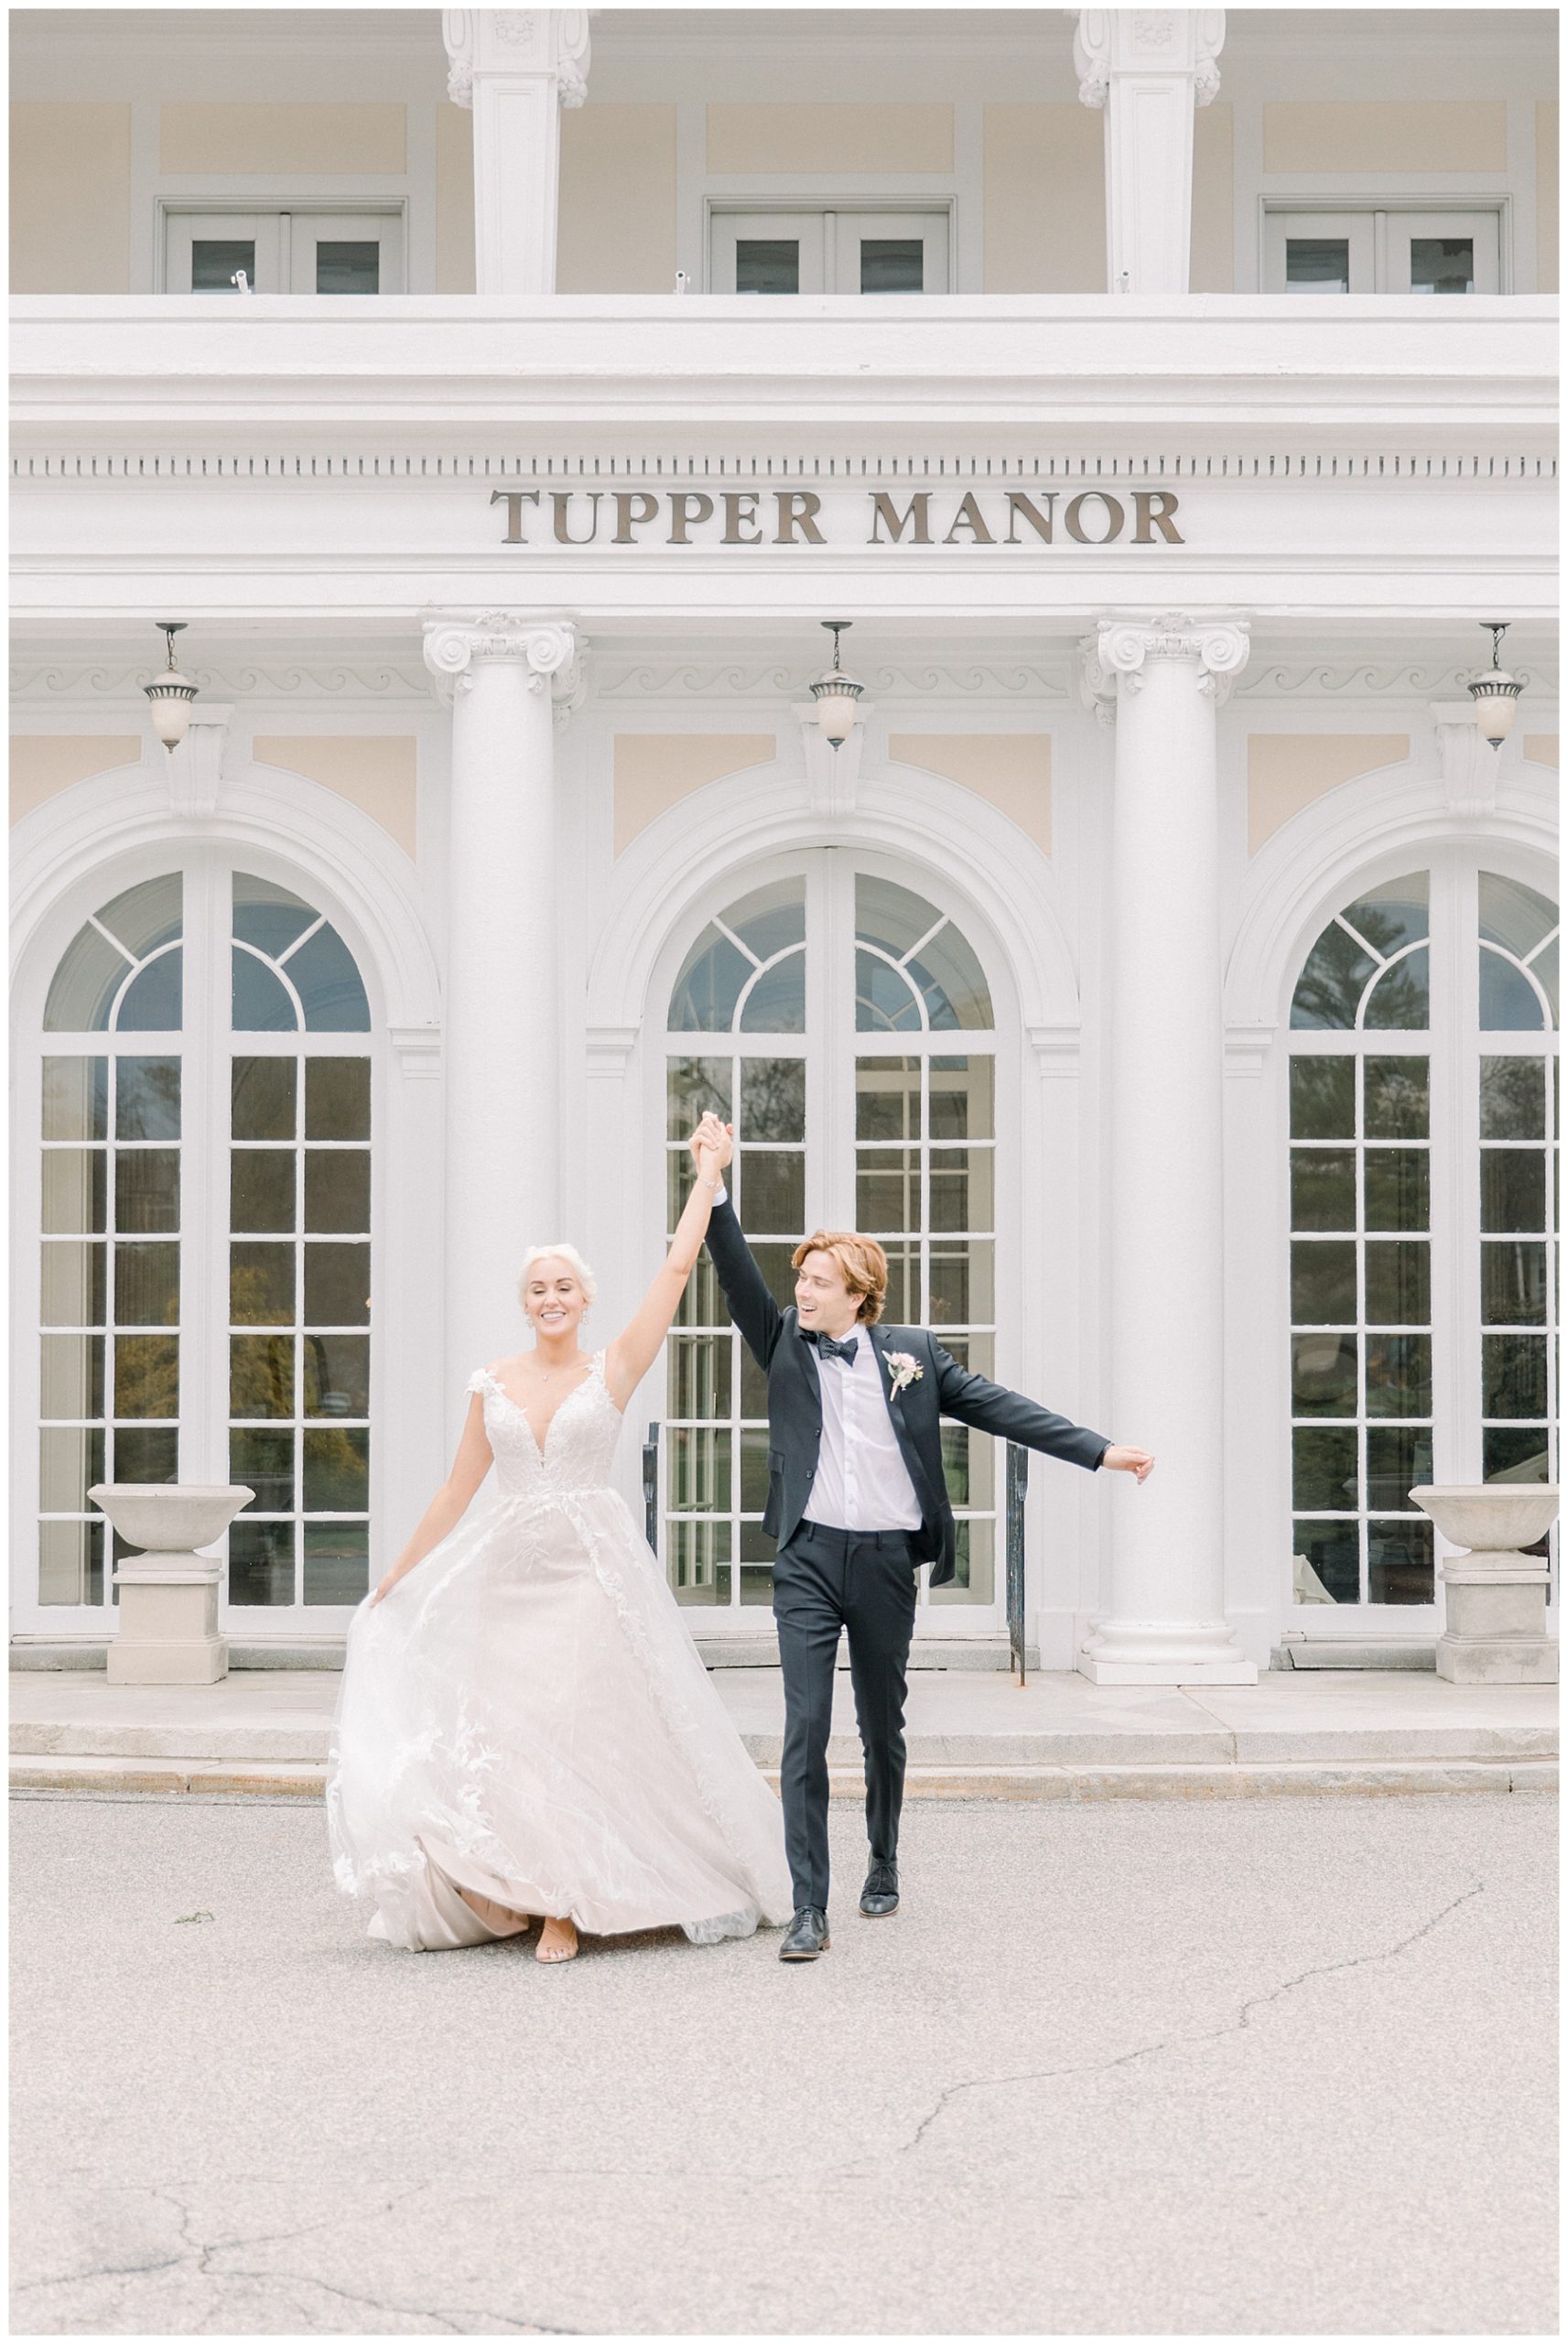 Couple celebrate outside Tupper Manor